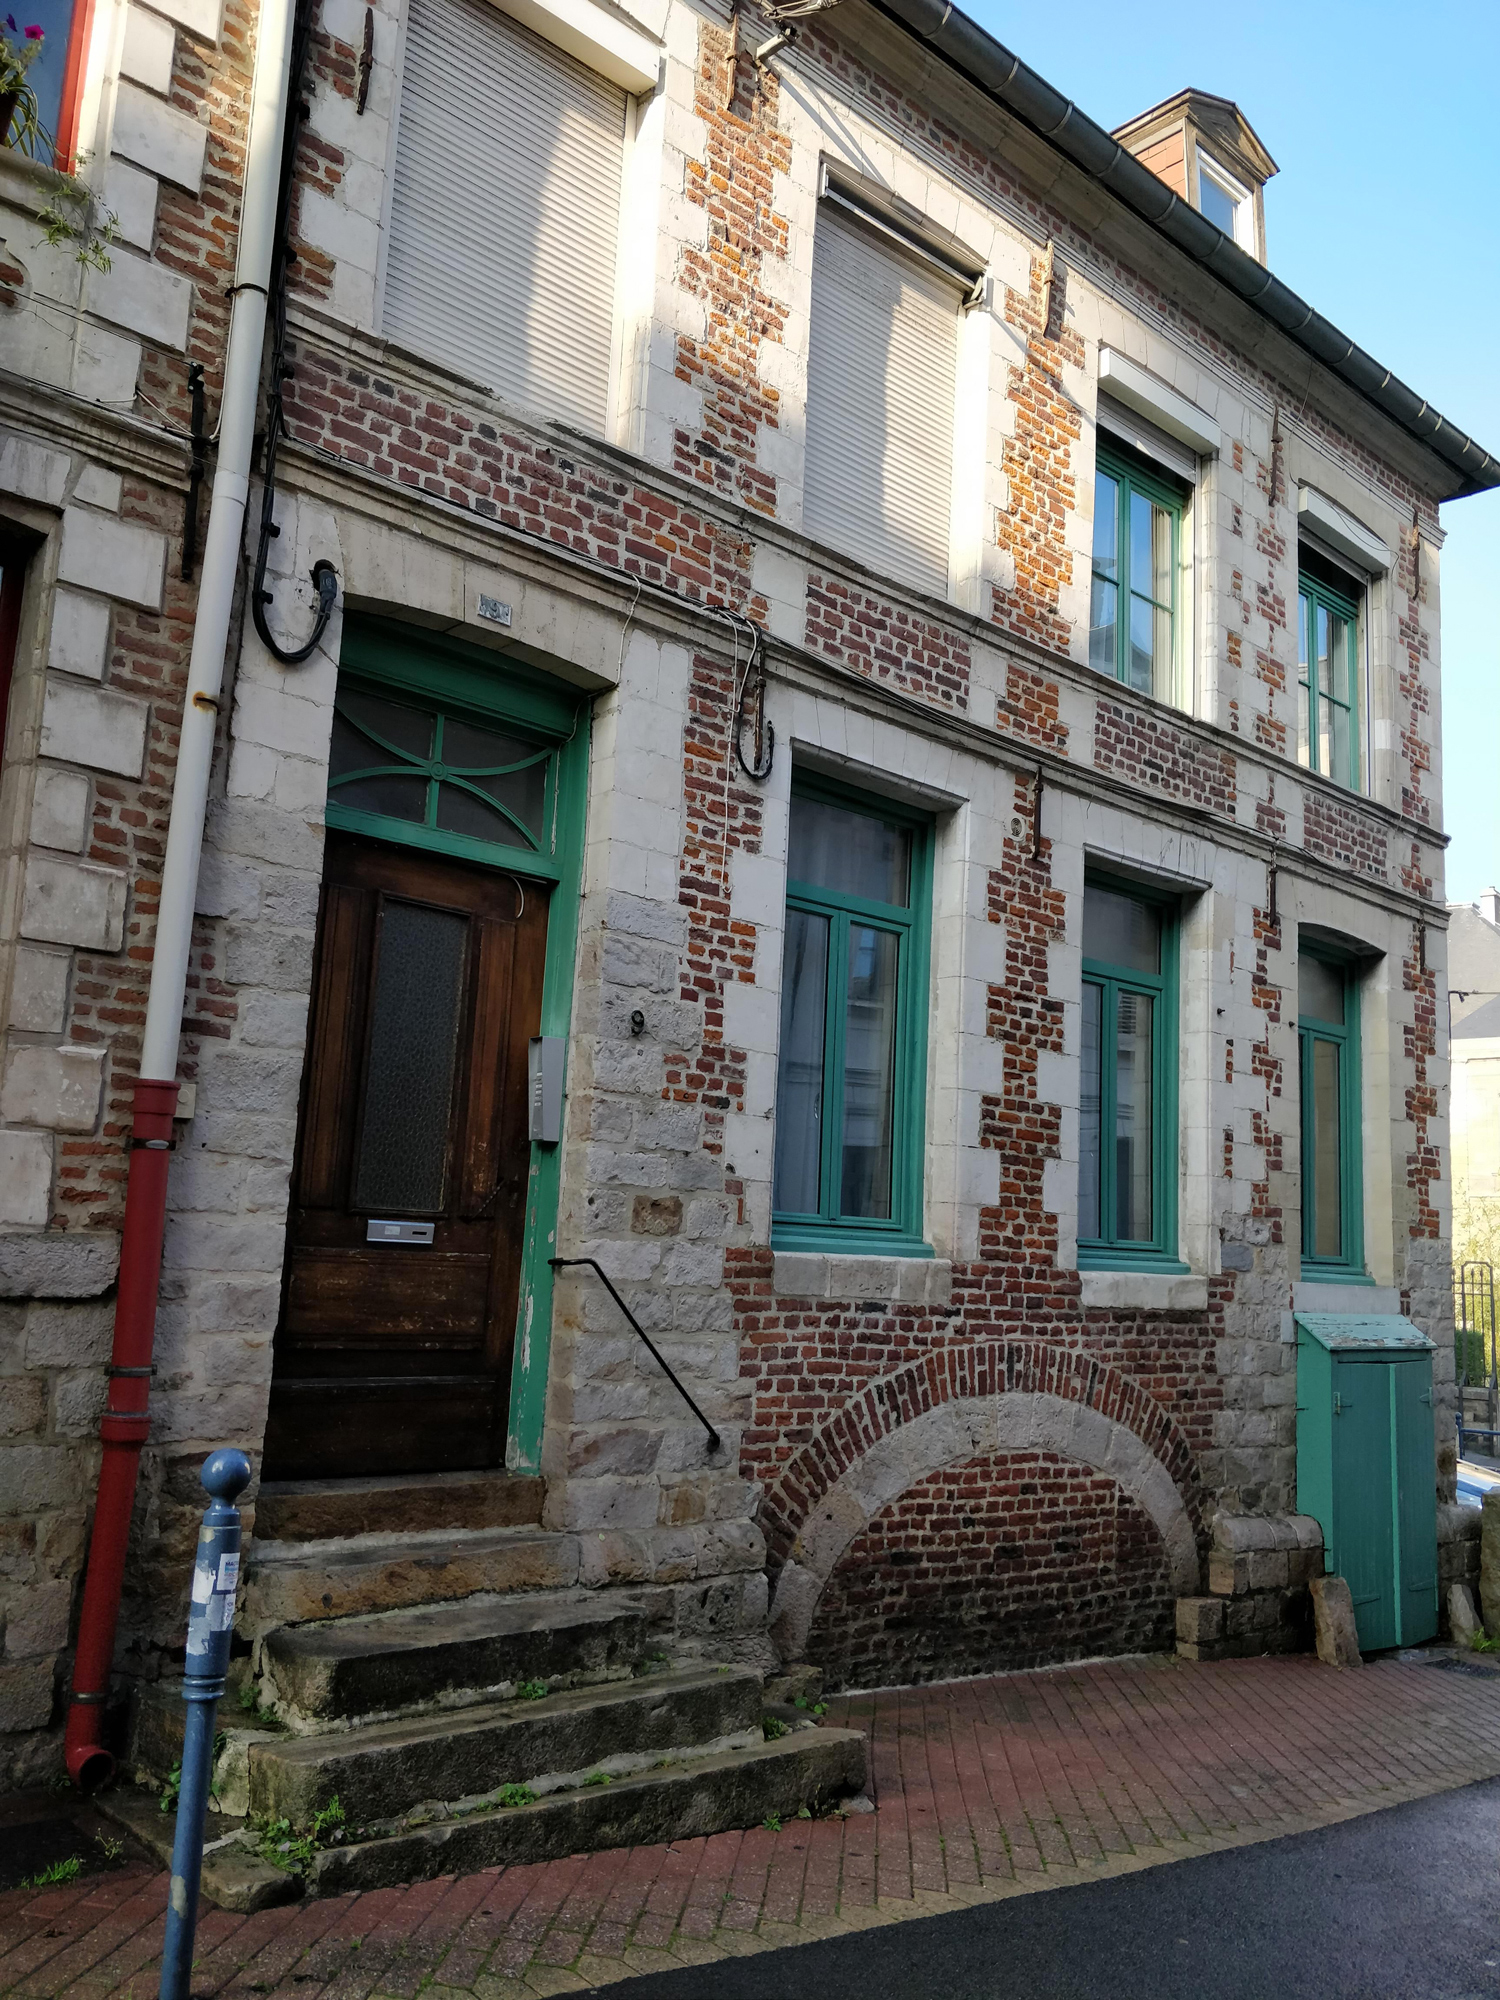 House in Arras